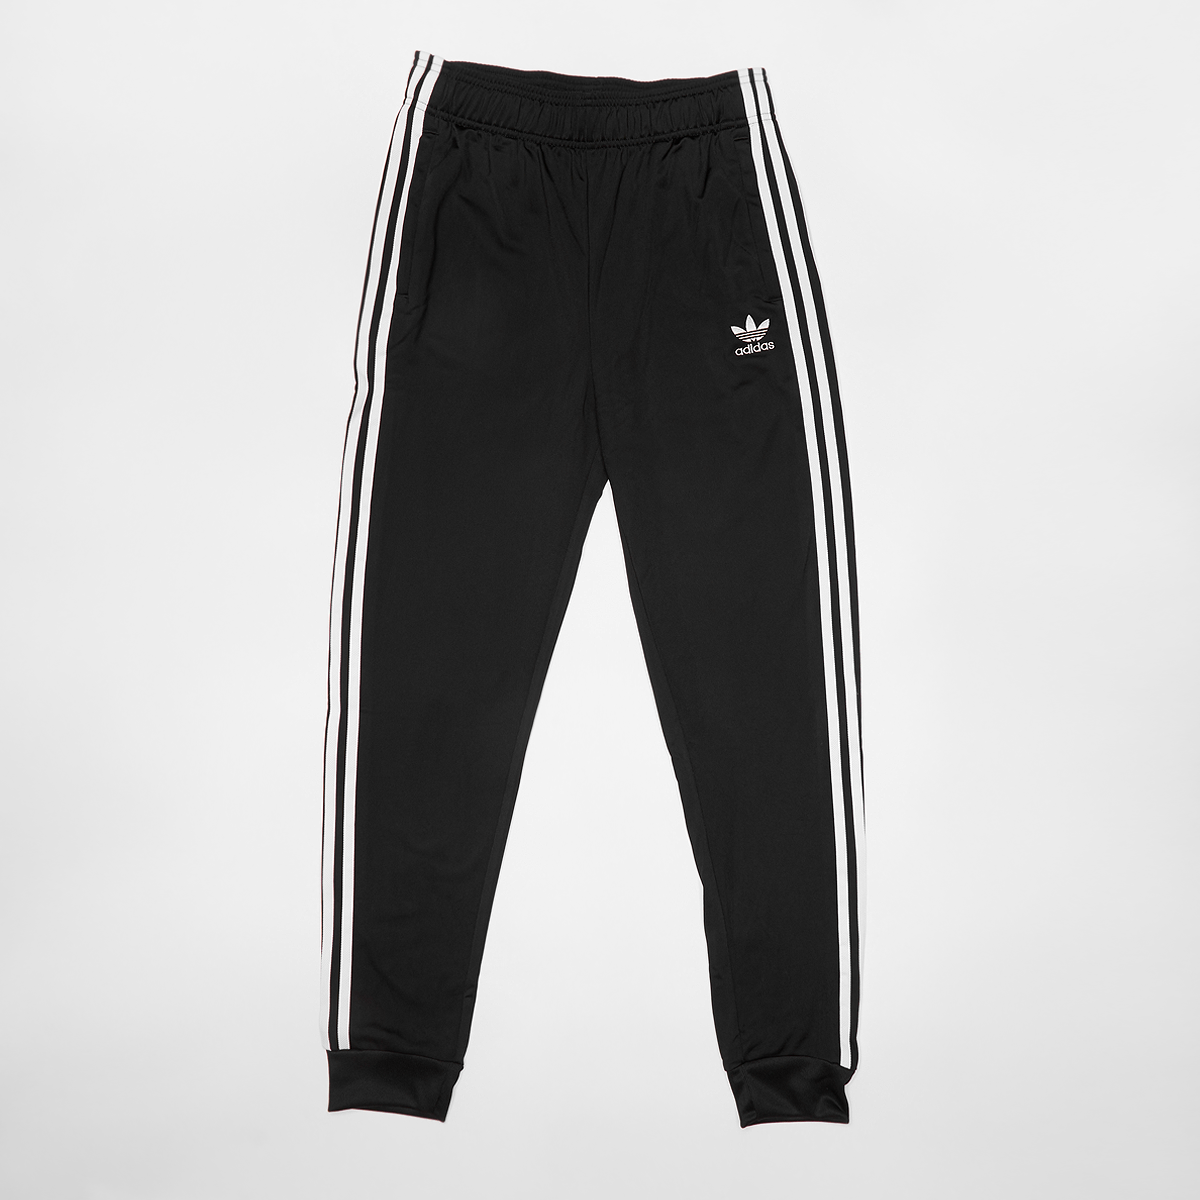 Pantalon de Survêtement adicolor Superstar, adidas Originals, Apparel, black/white, taille: 134